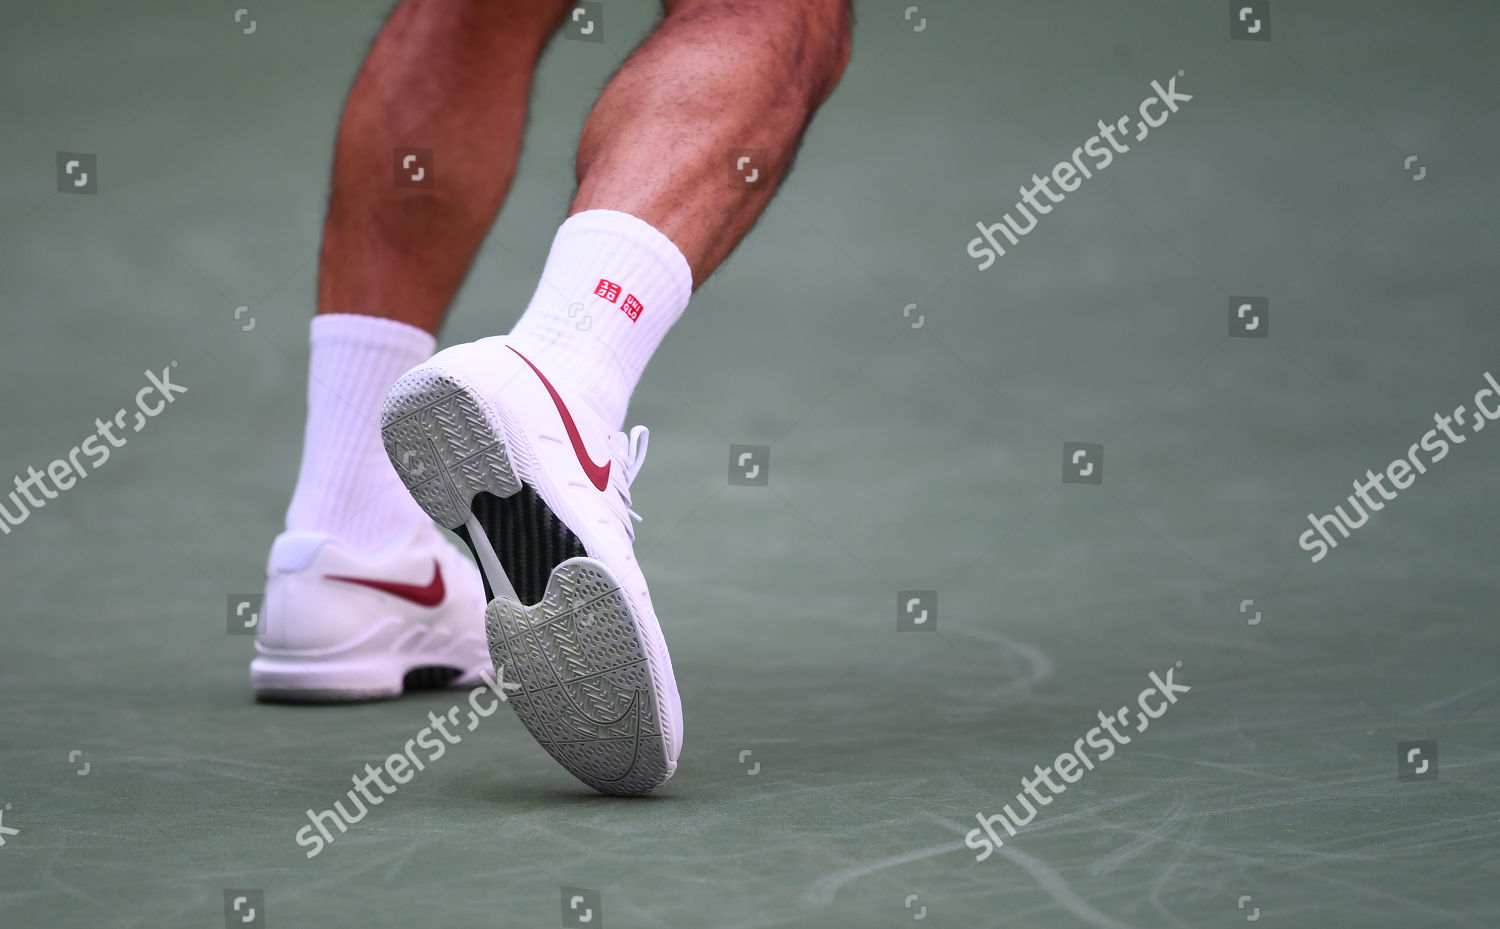 Nike Tennis Shoes Uniqlo Socks Roger - Foto stock de editorial: imagen de stock | Shutterstock Editorial